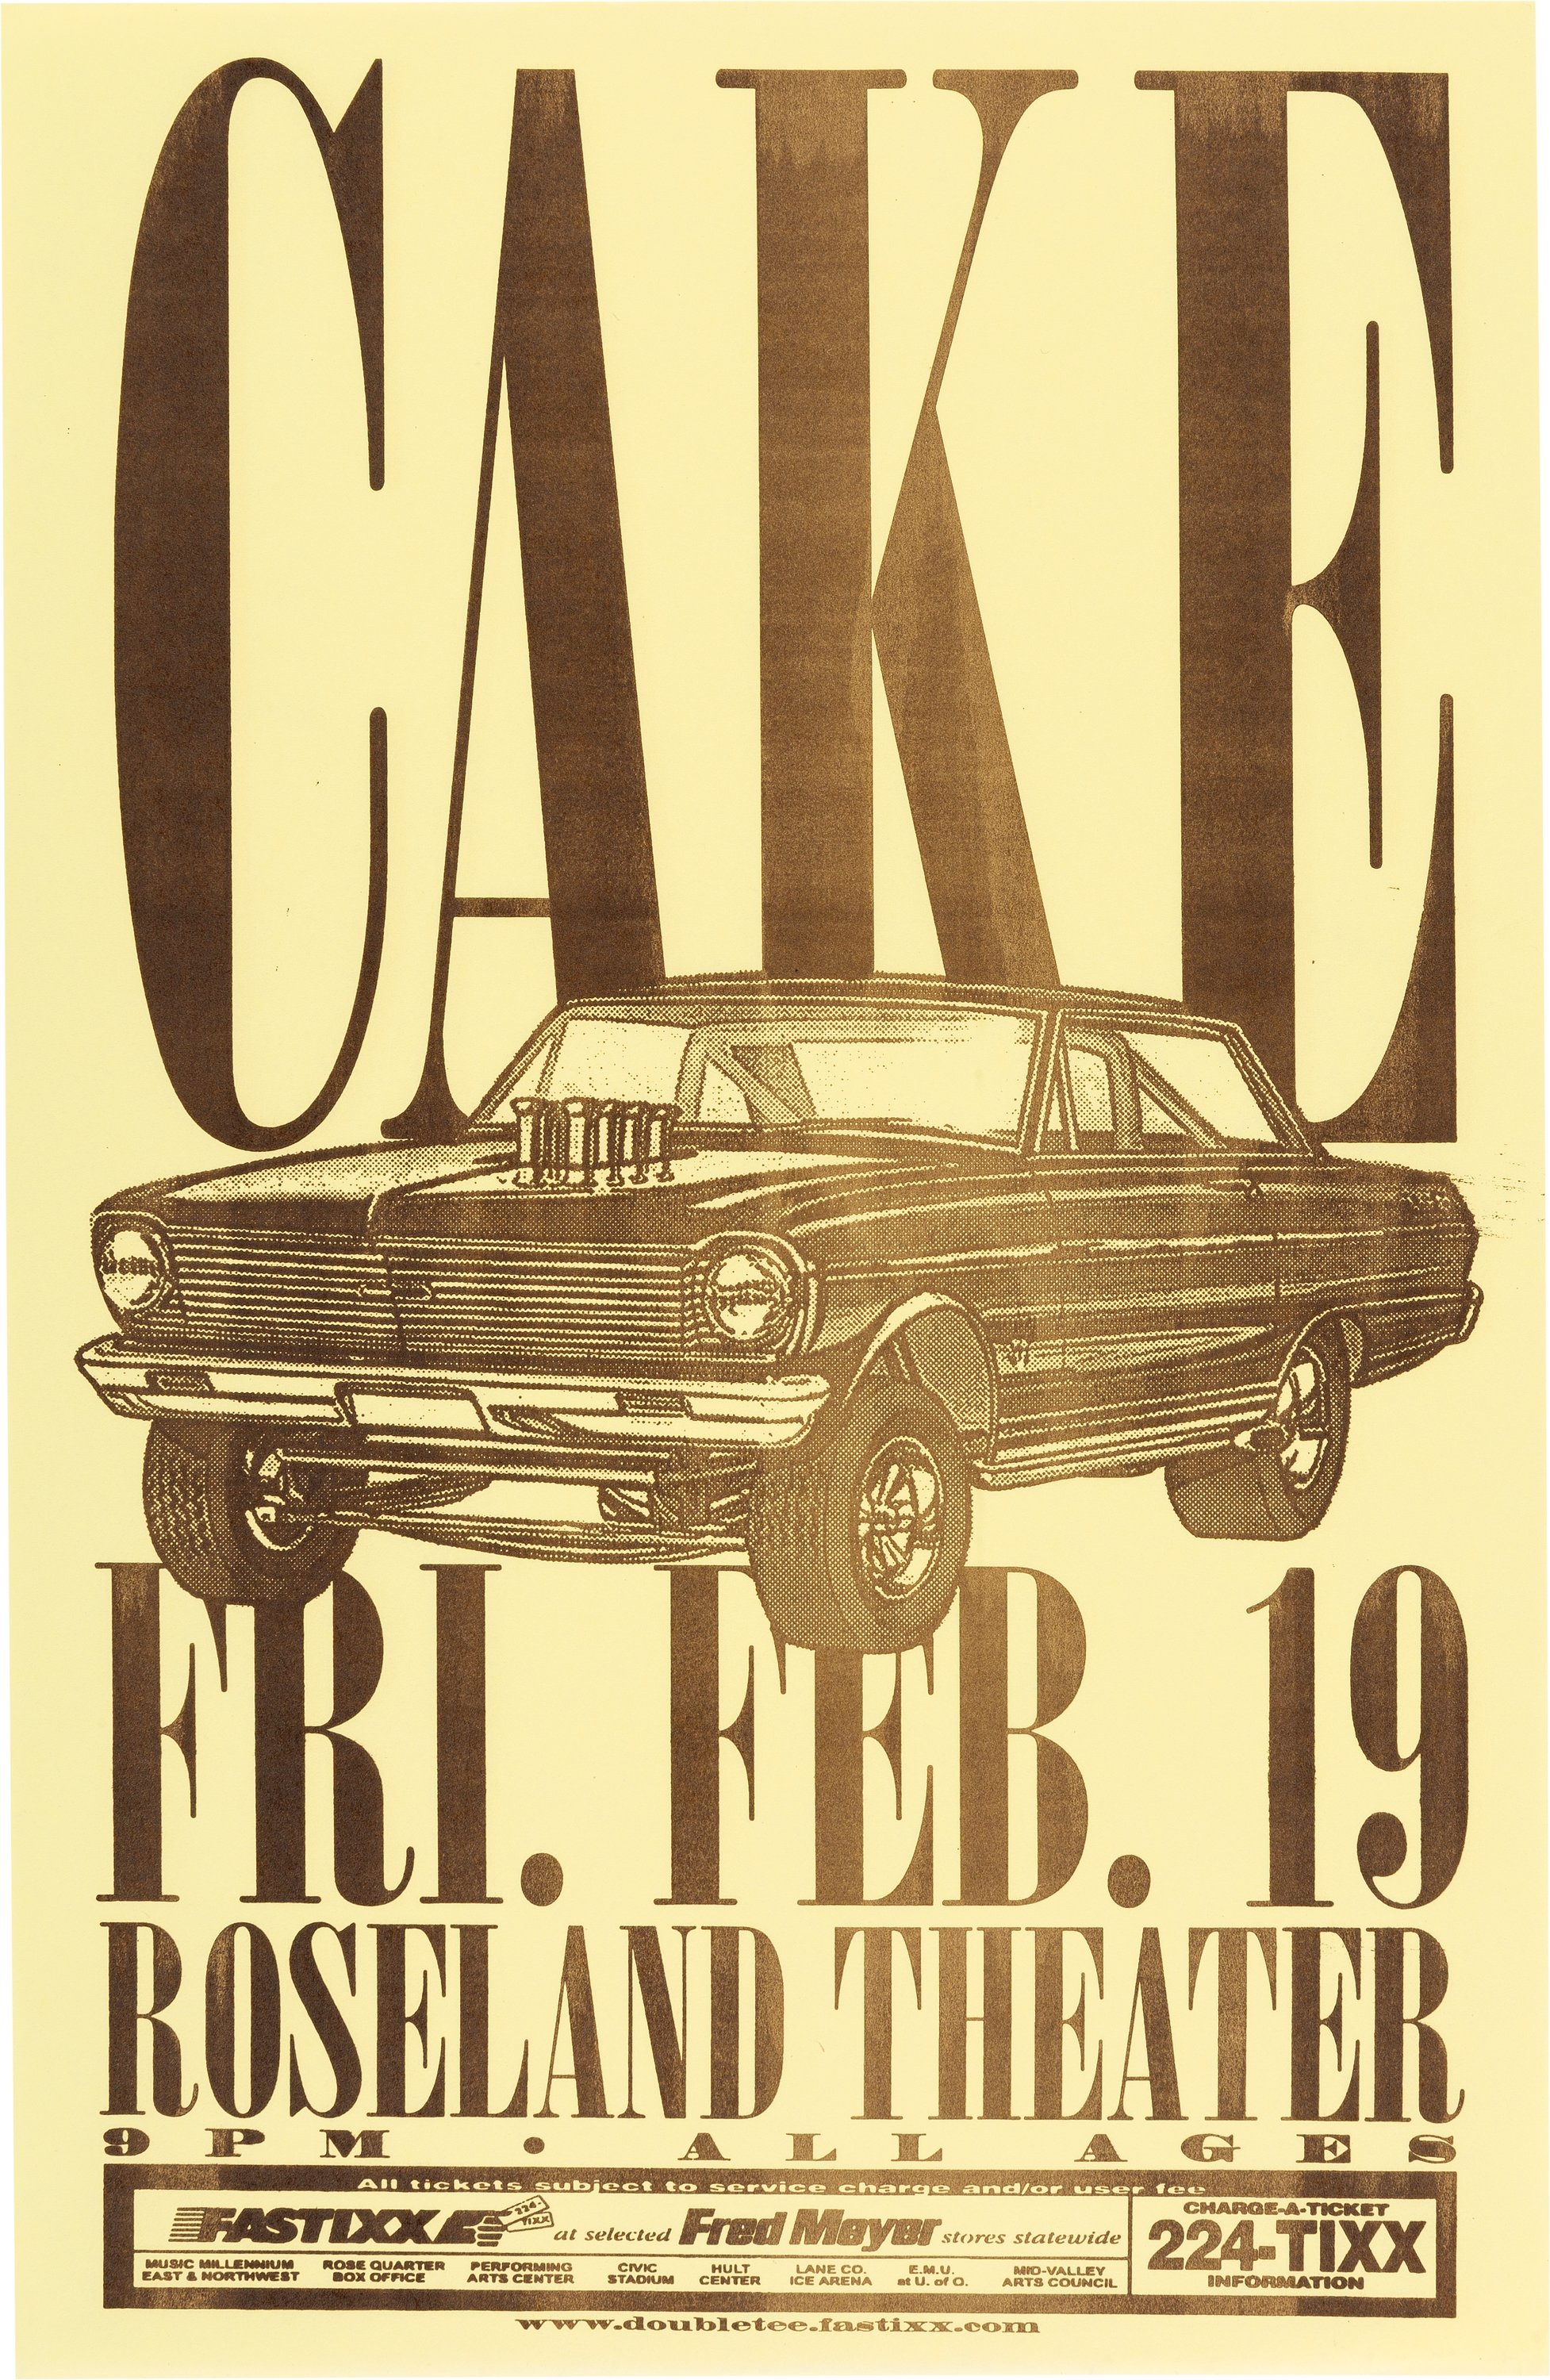 cake band poster